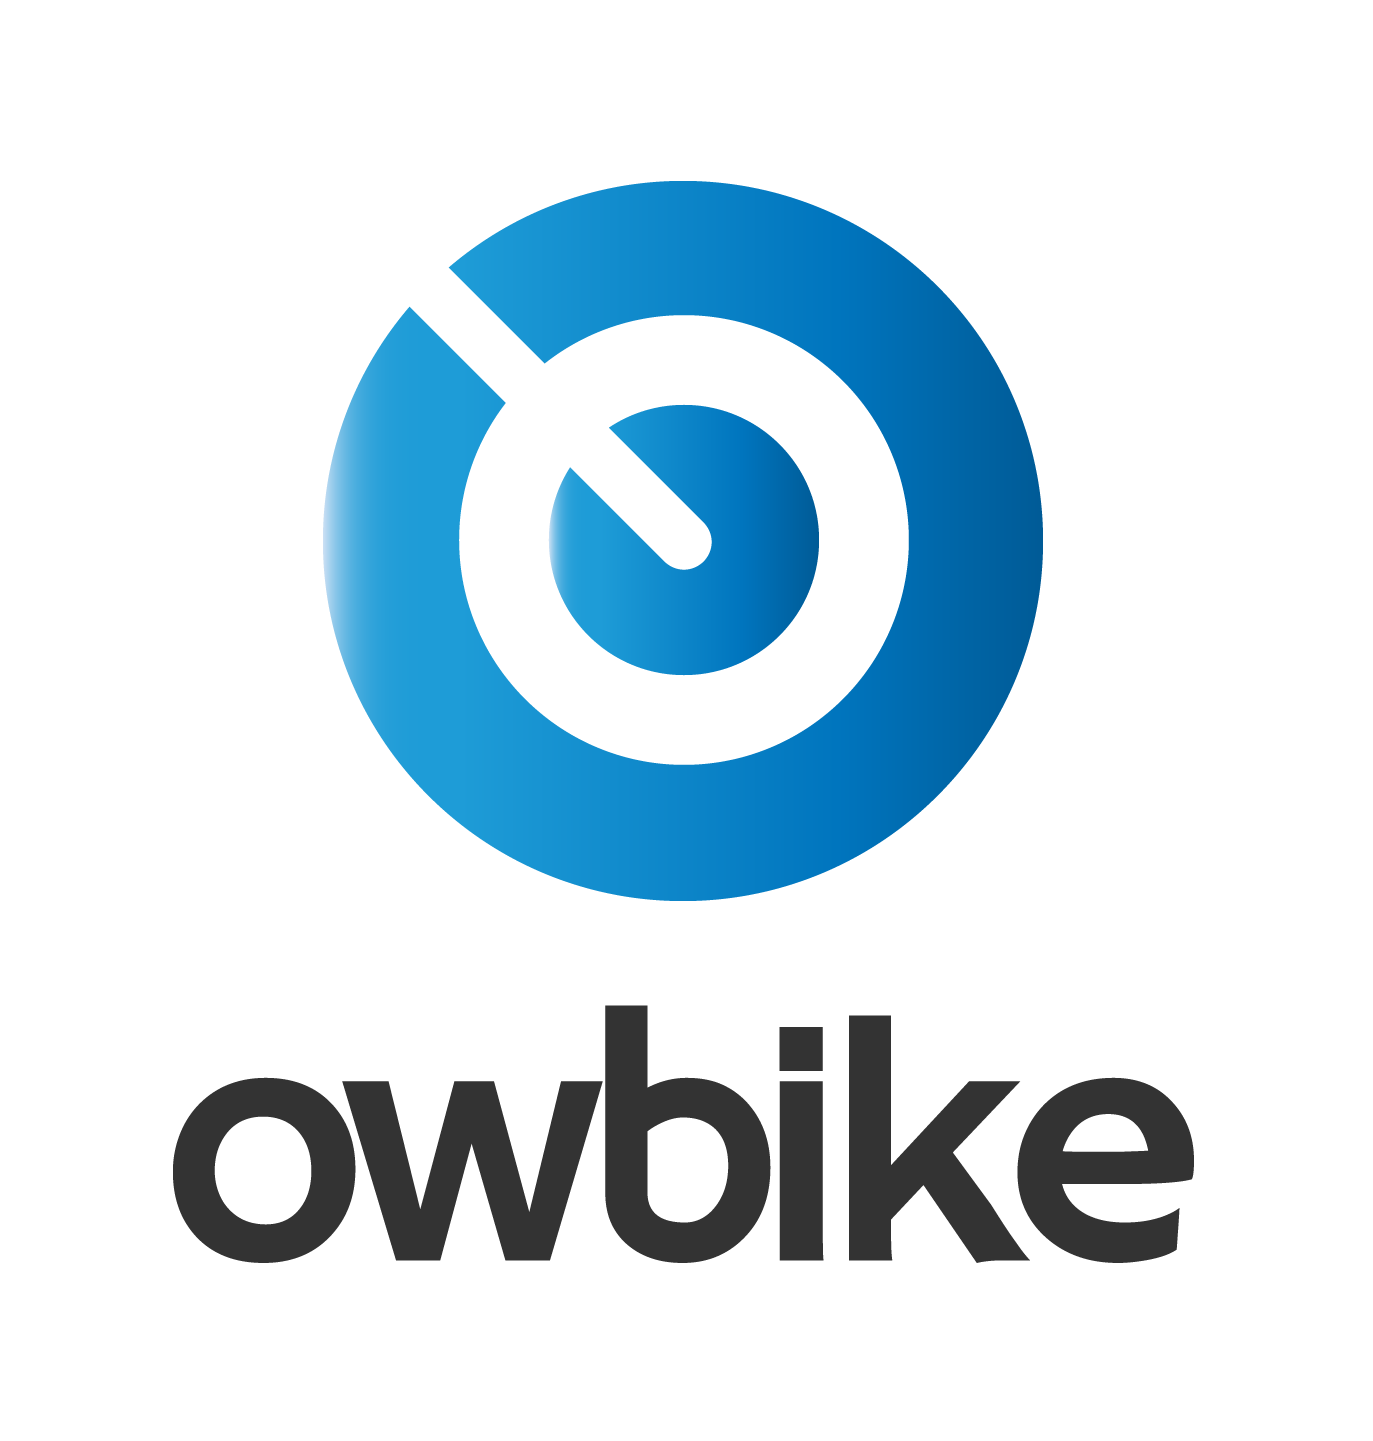 Owbike - Crunchbase Company Profile & Funding